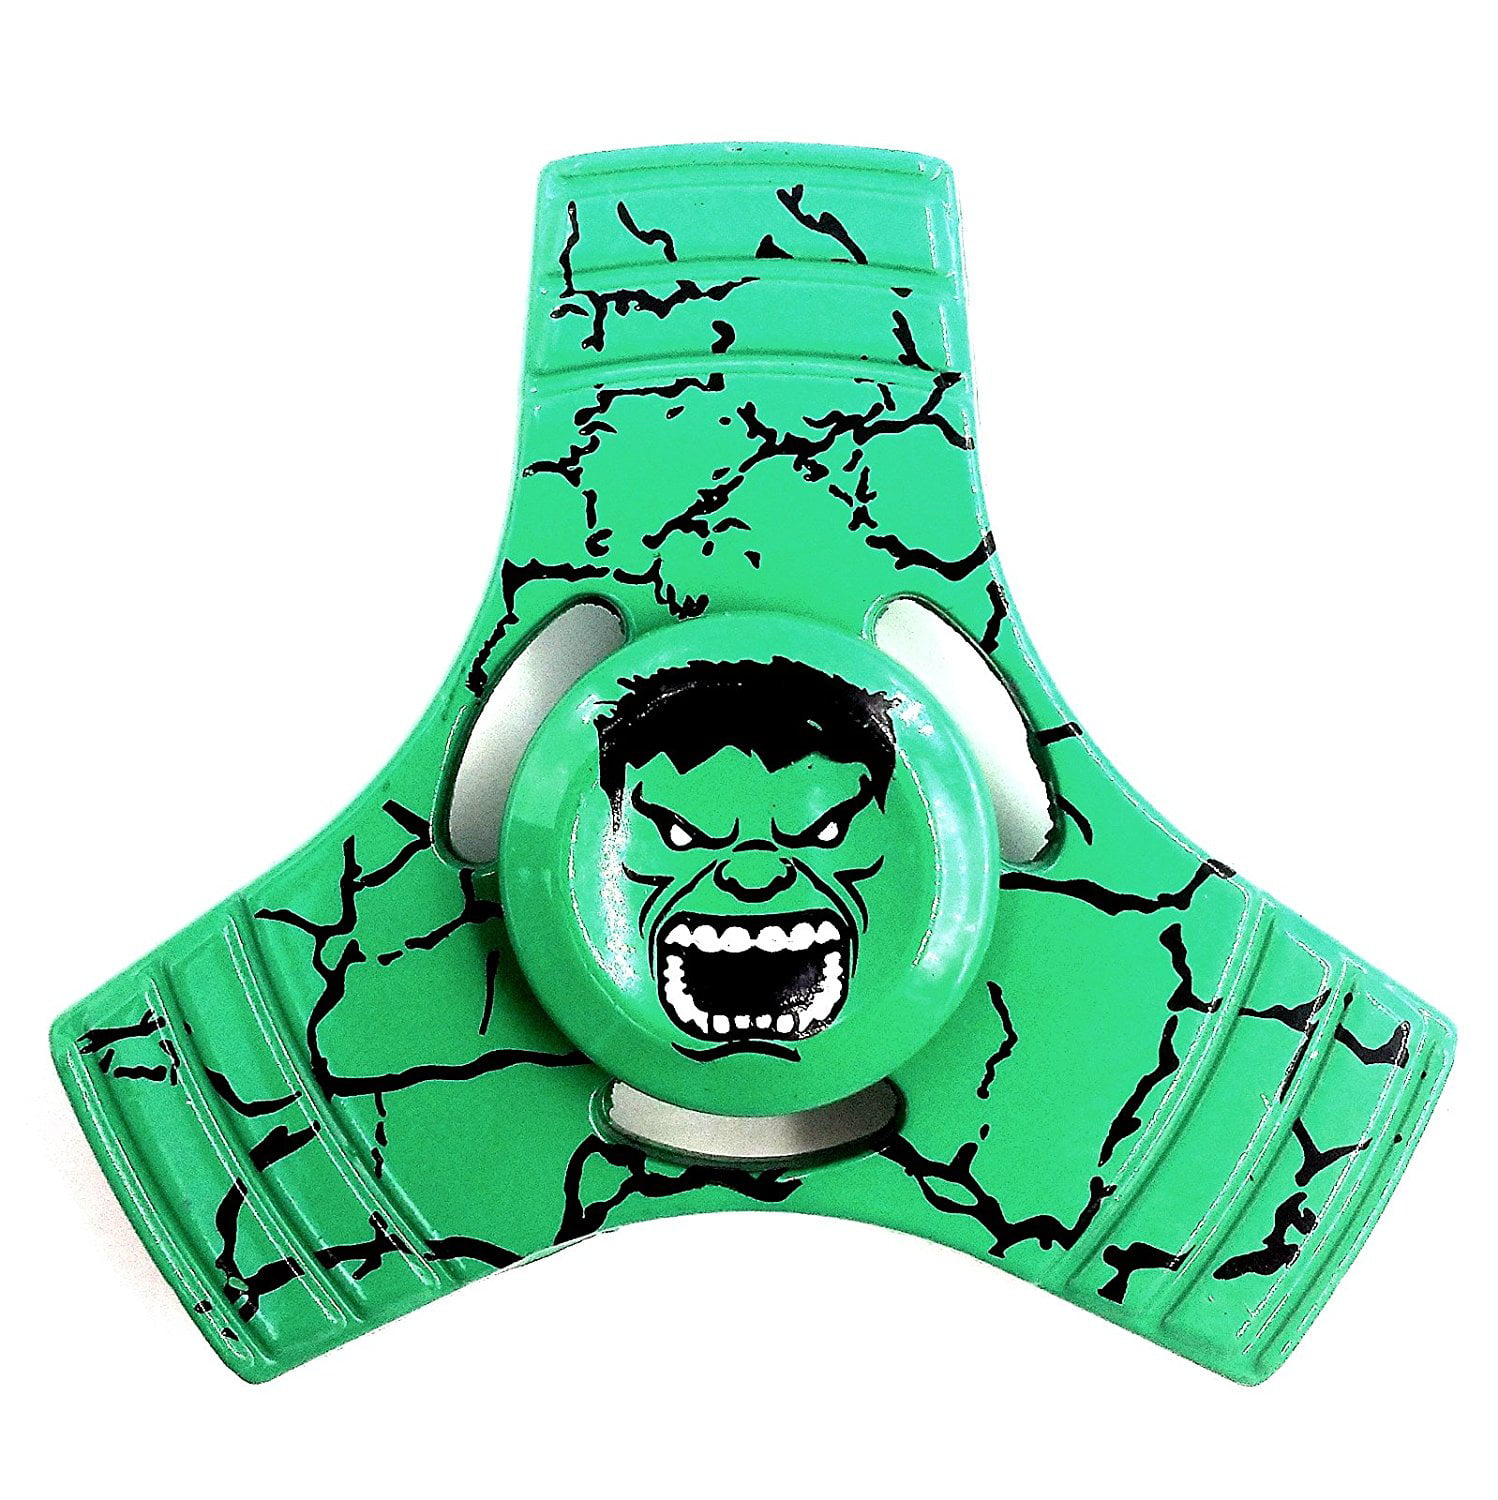 Quality Spinner The Hulk Marvel Heroes Style Metal Fidget